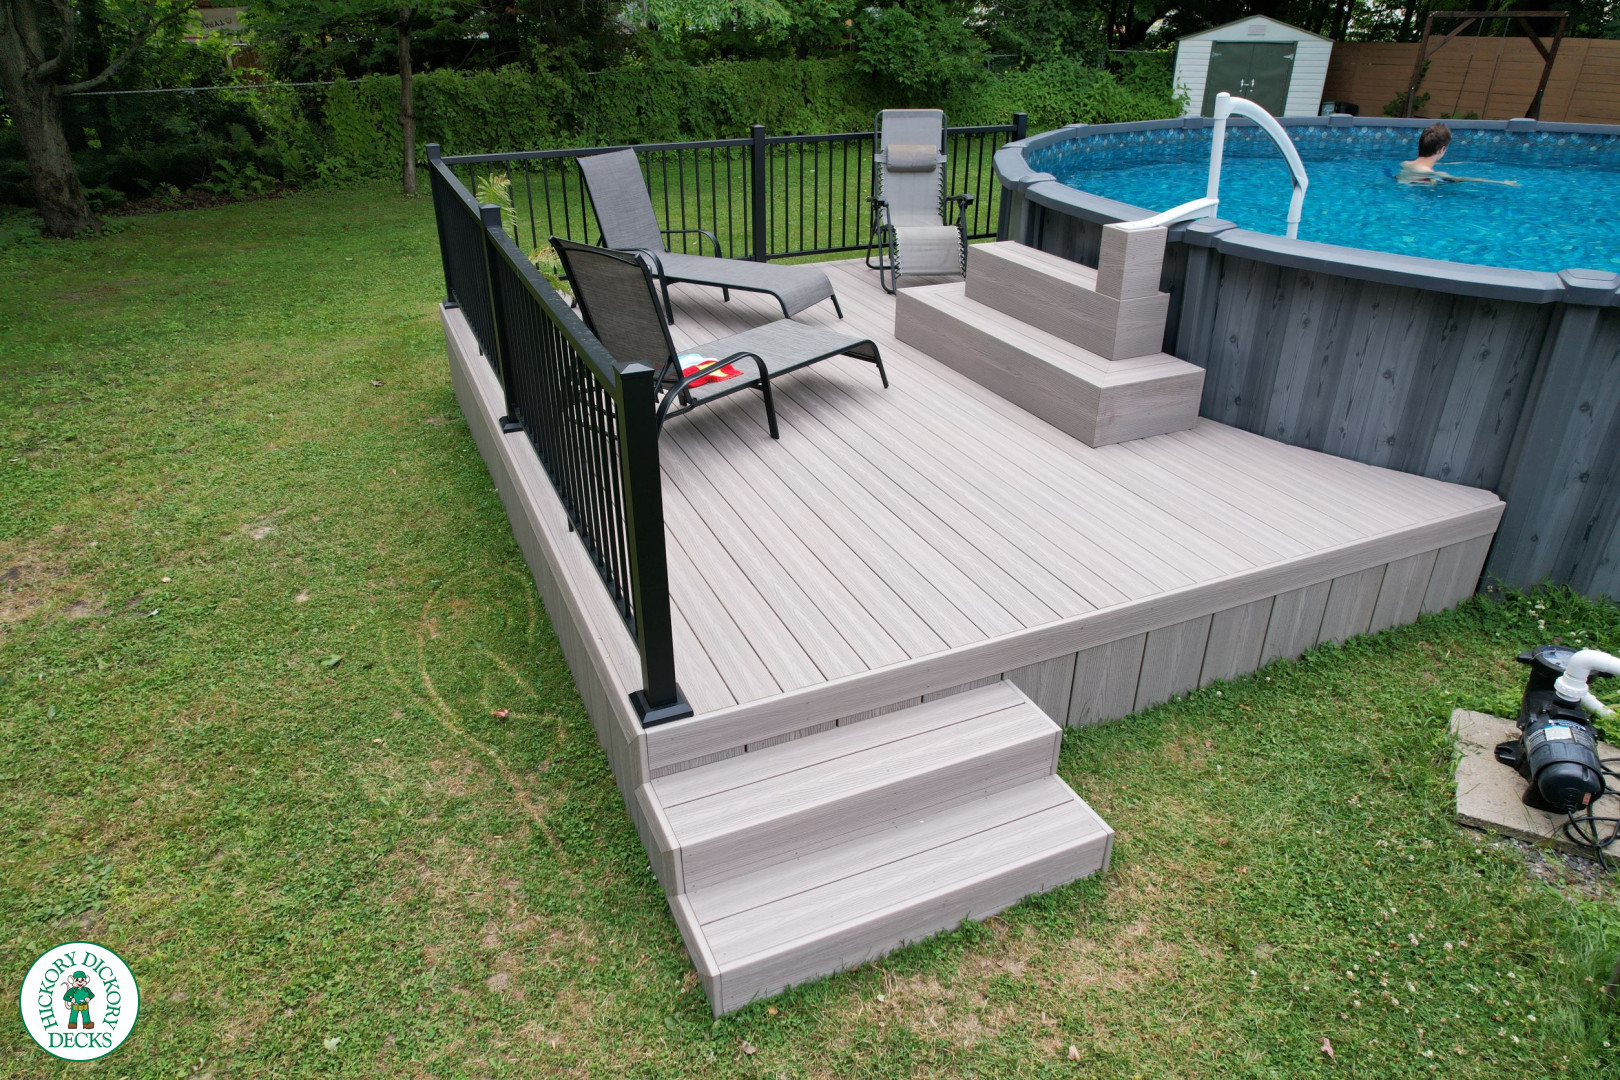 Small grey fiberon deck built around an above ground pool.